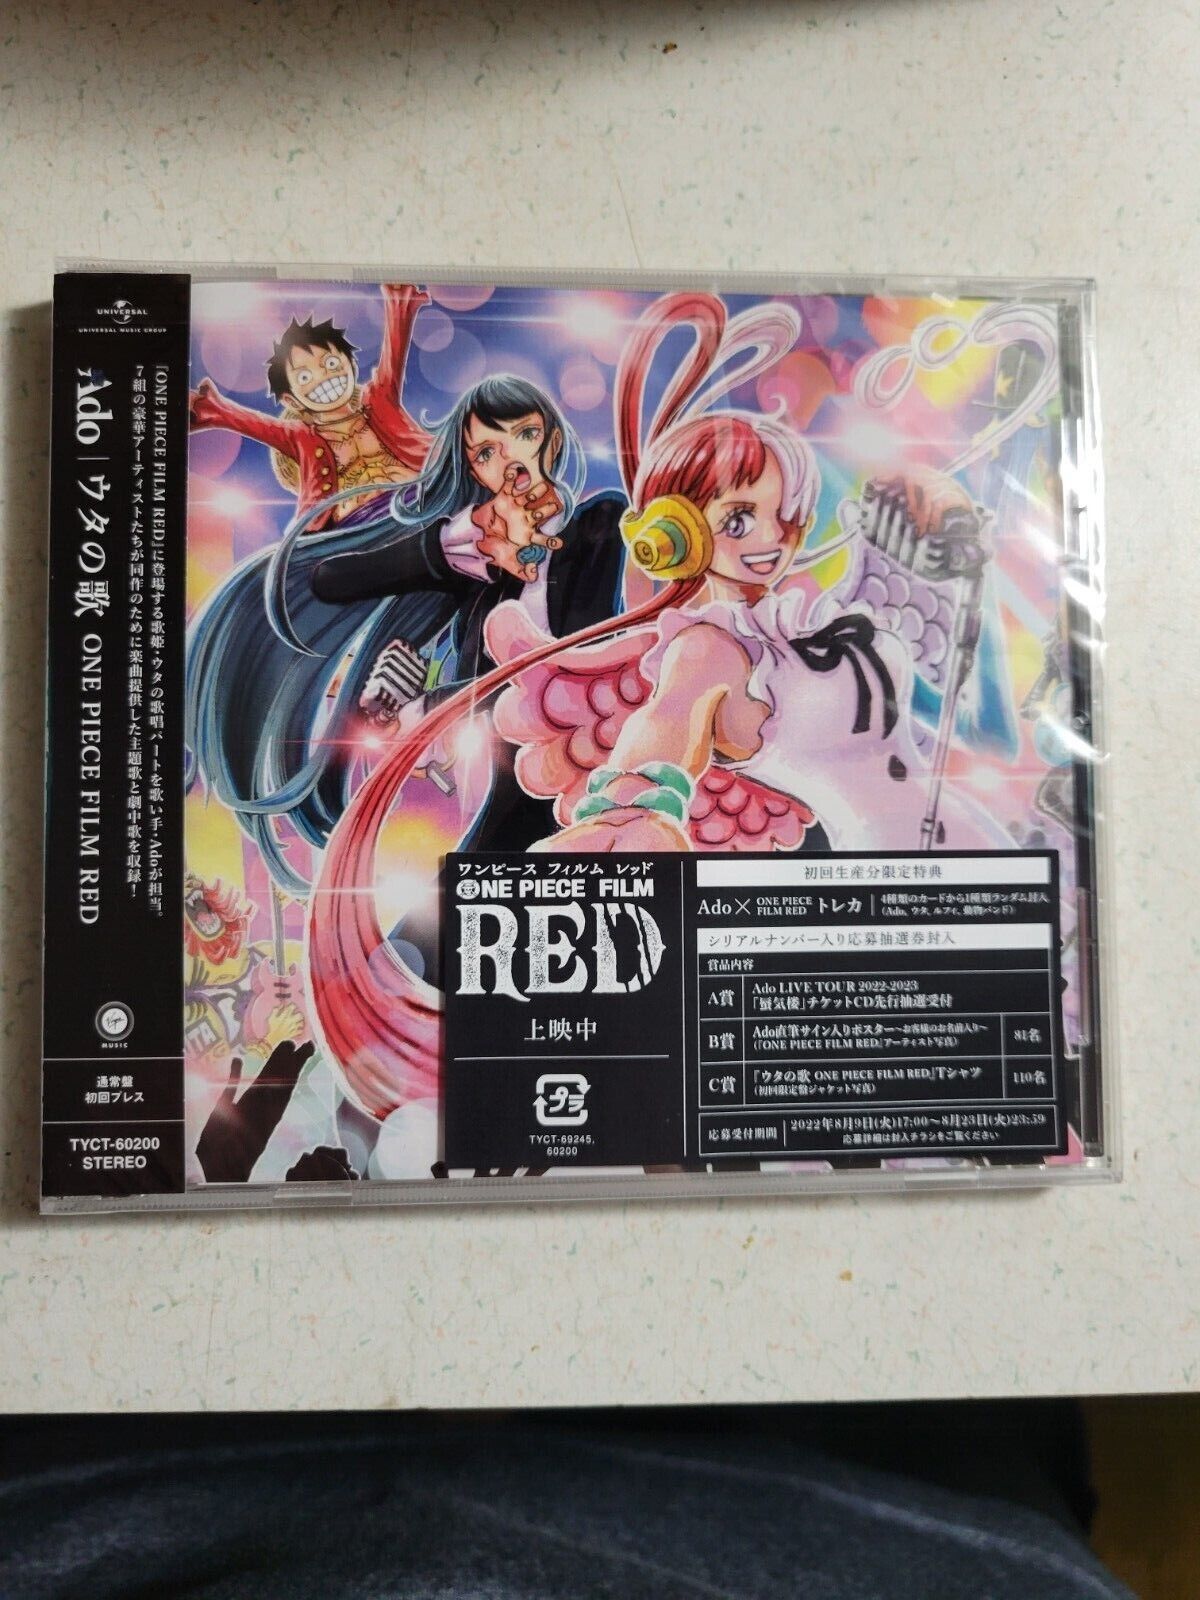 Ado Uta no Uta ONE PIECE FILM RED limited Edition CD Card Japan TYCT-60200 open